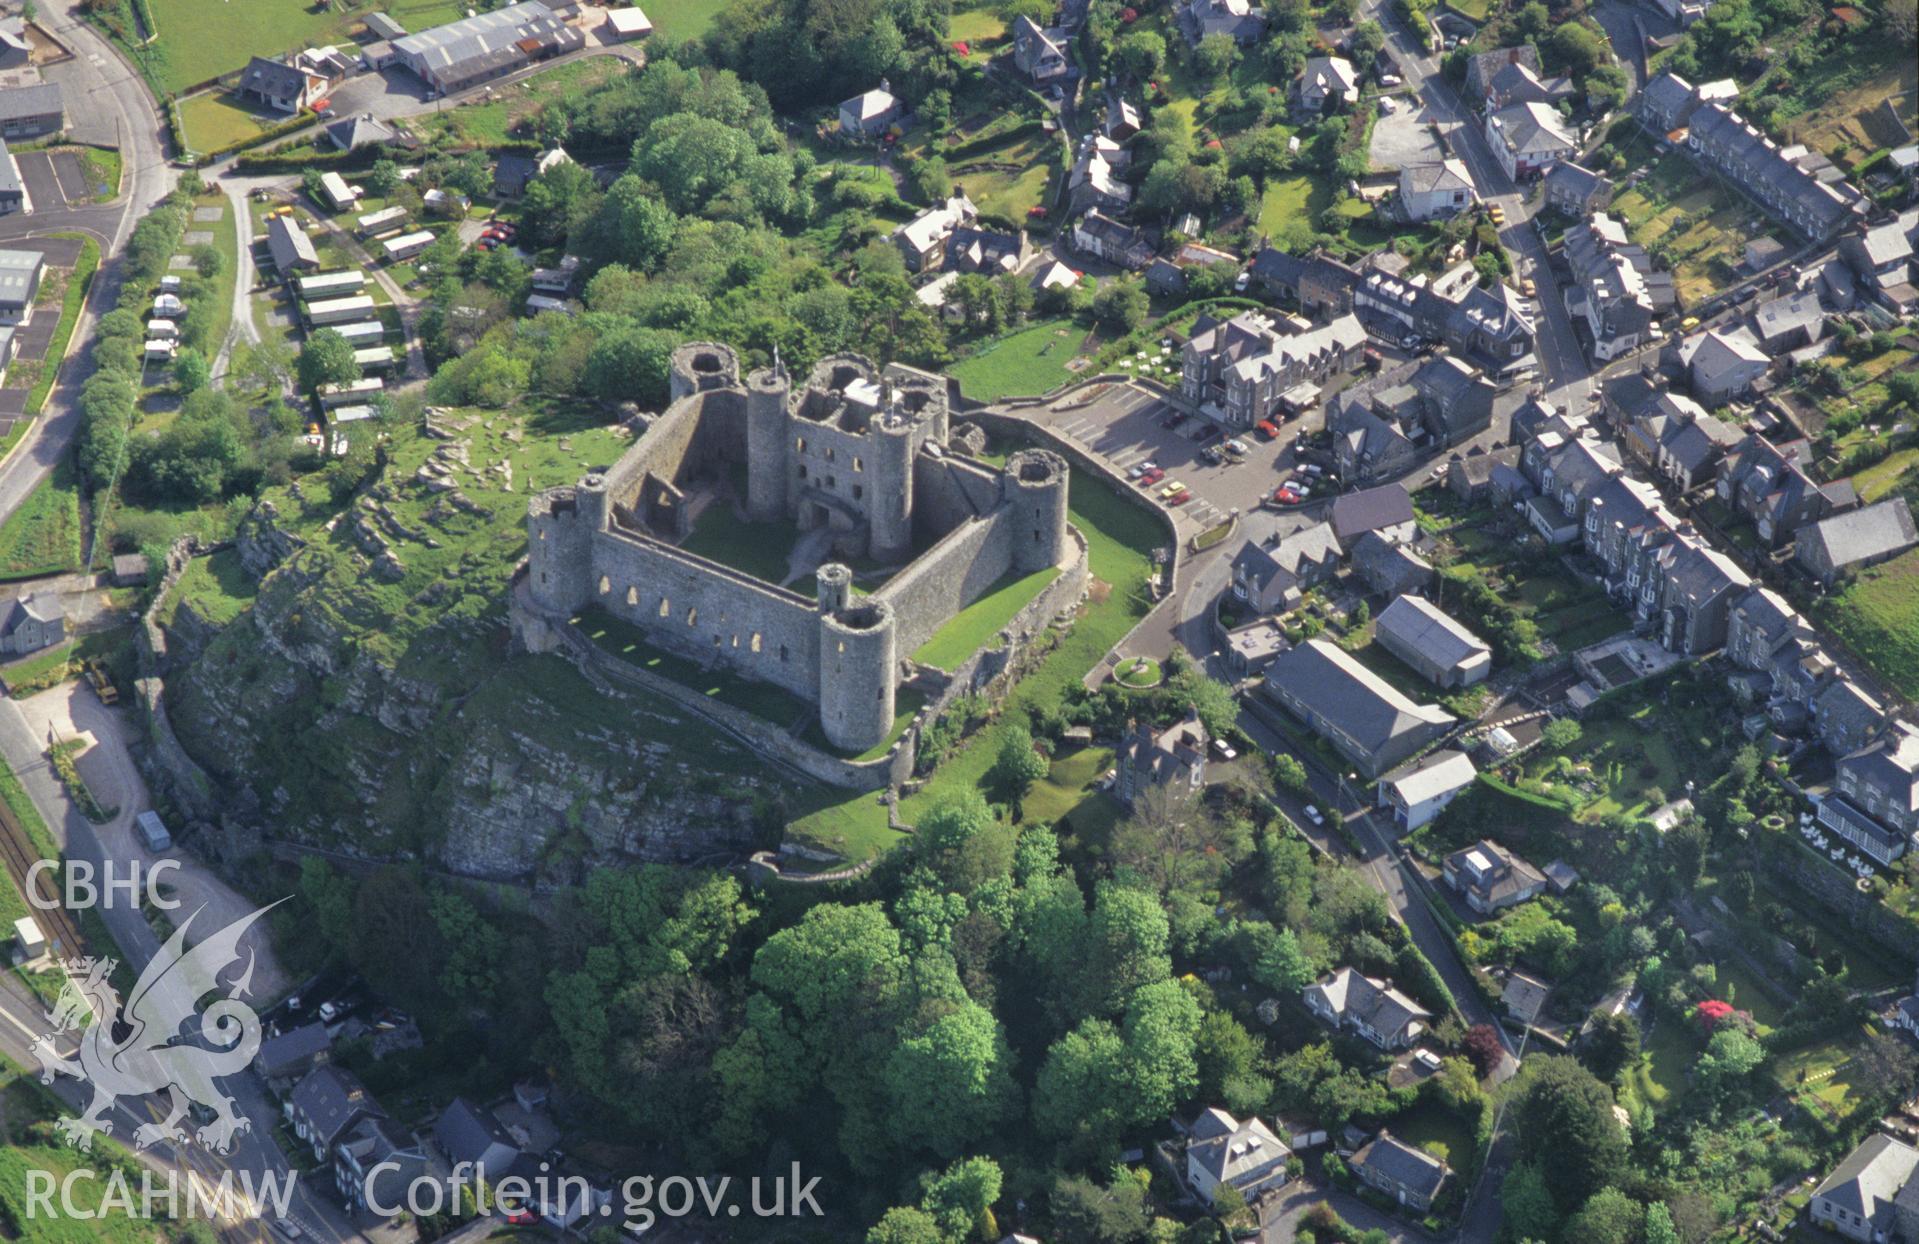 Slide of RCAHMW colour oblique aerial photograph of Harlech Castle, taken by C.R. Musson, 4/5/1993.